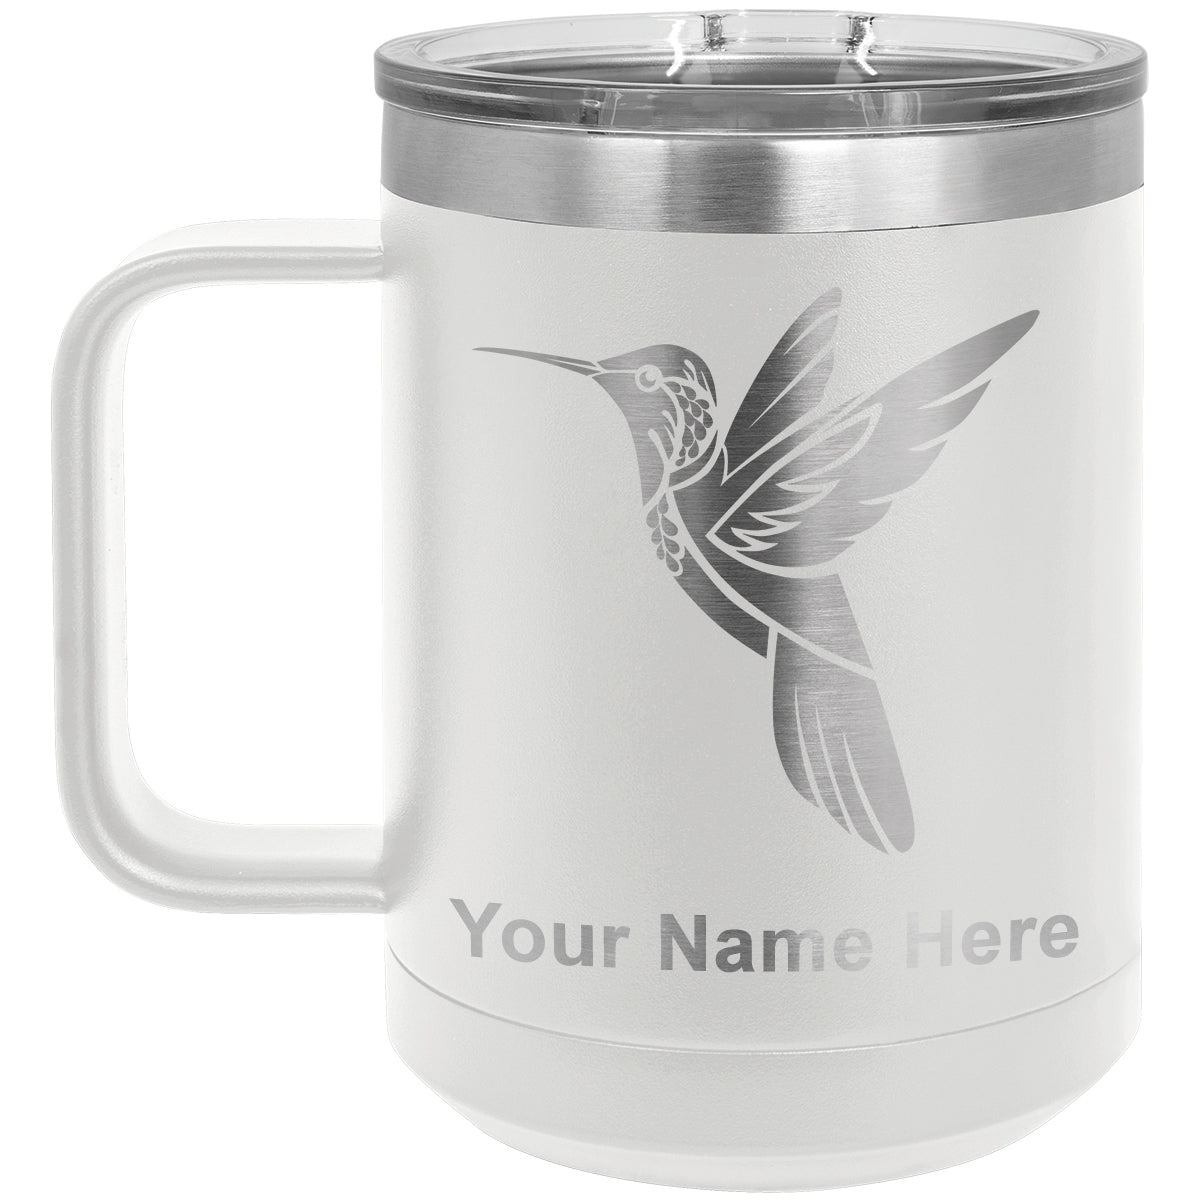 15oz Vacuum Insulated Coffee Mug, Hummingbird, Personalized Engraving Included